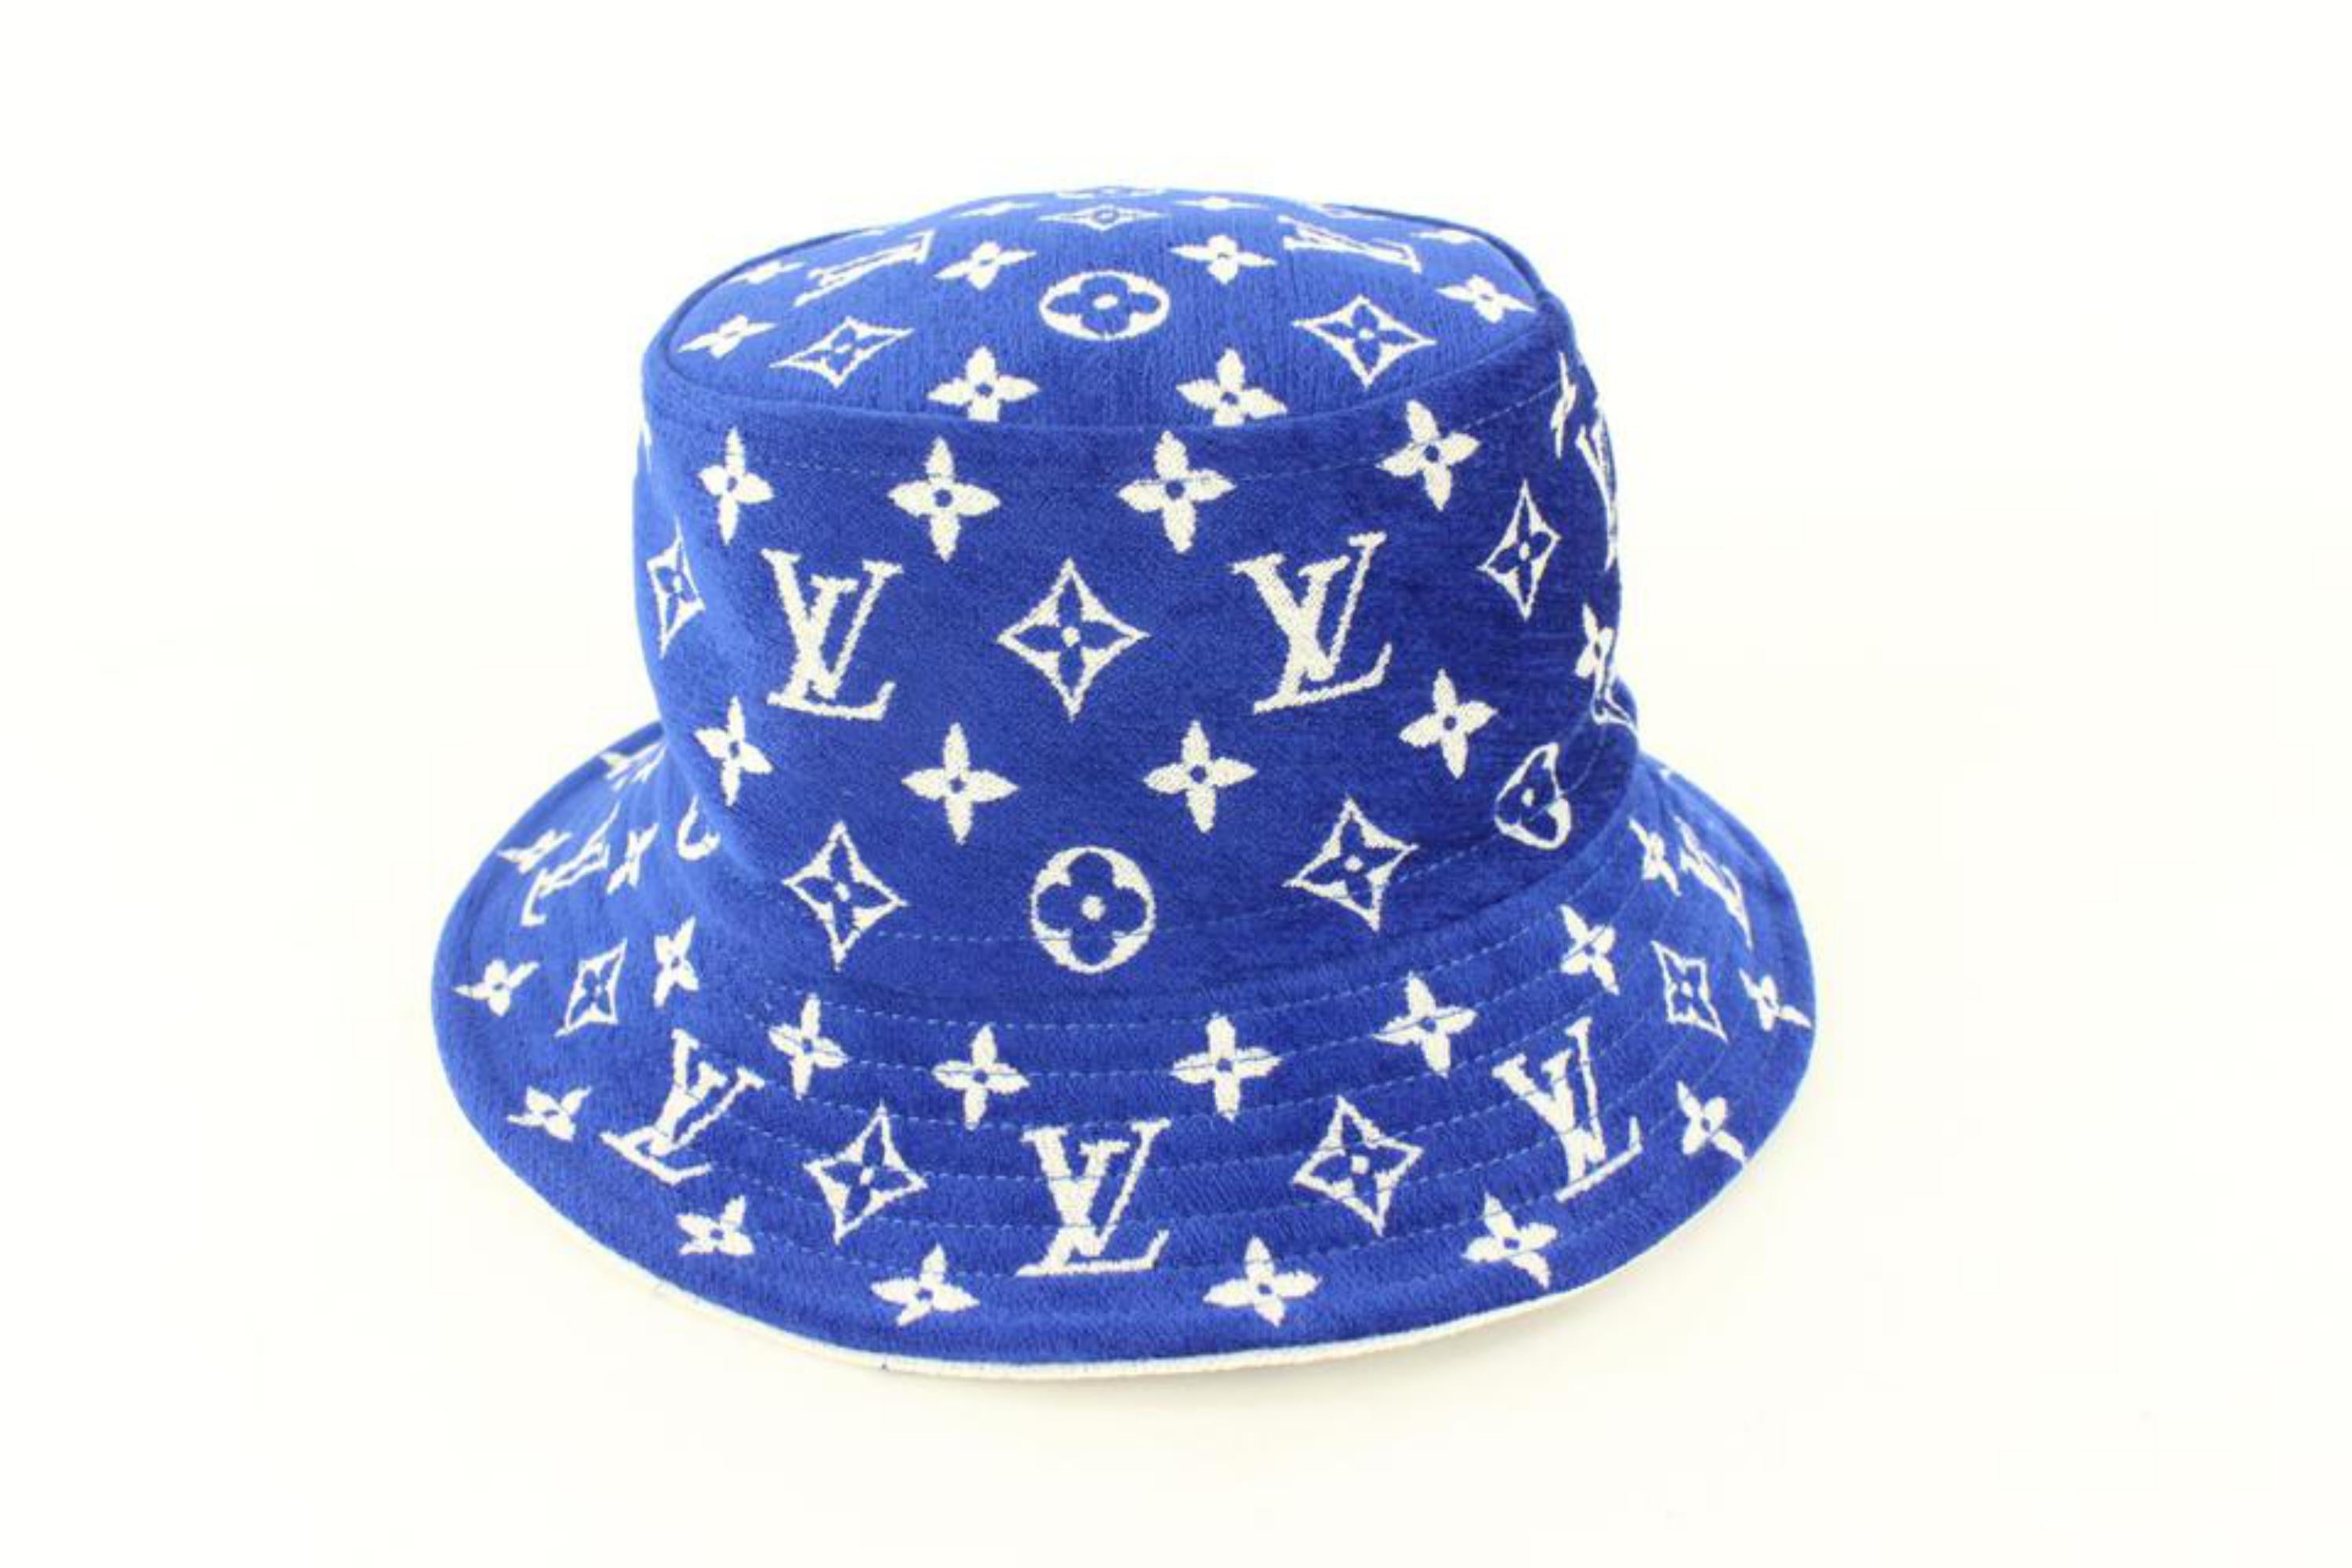 Louis Vuitton Heart Patch Emblazoned Blue Monogram Bucket Hat